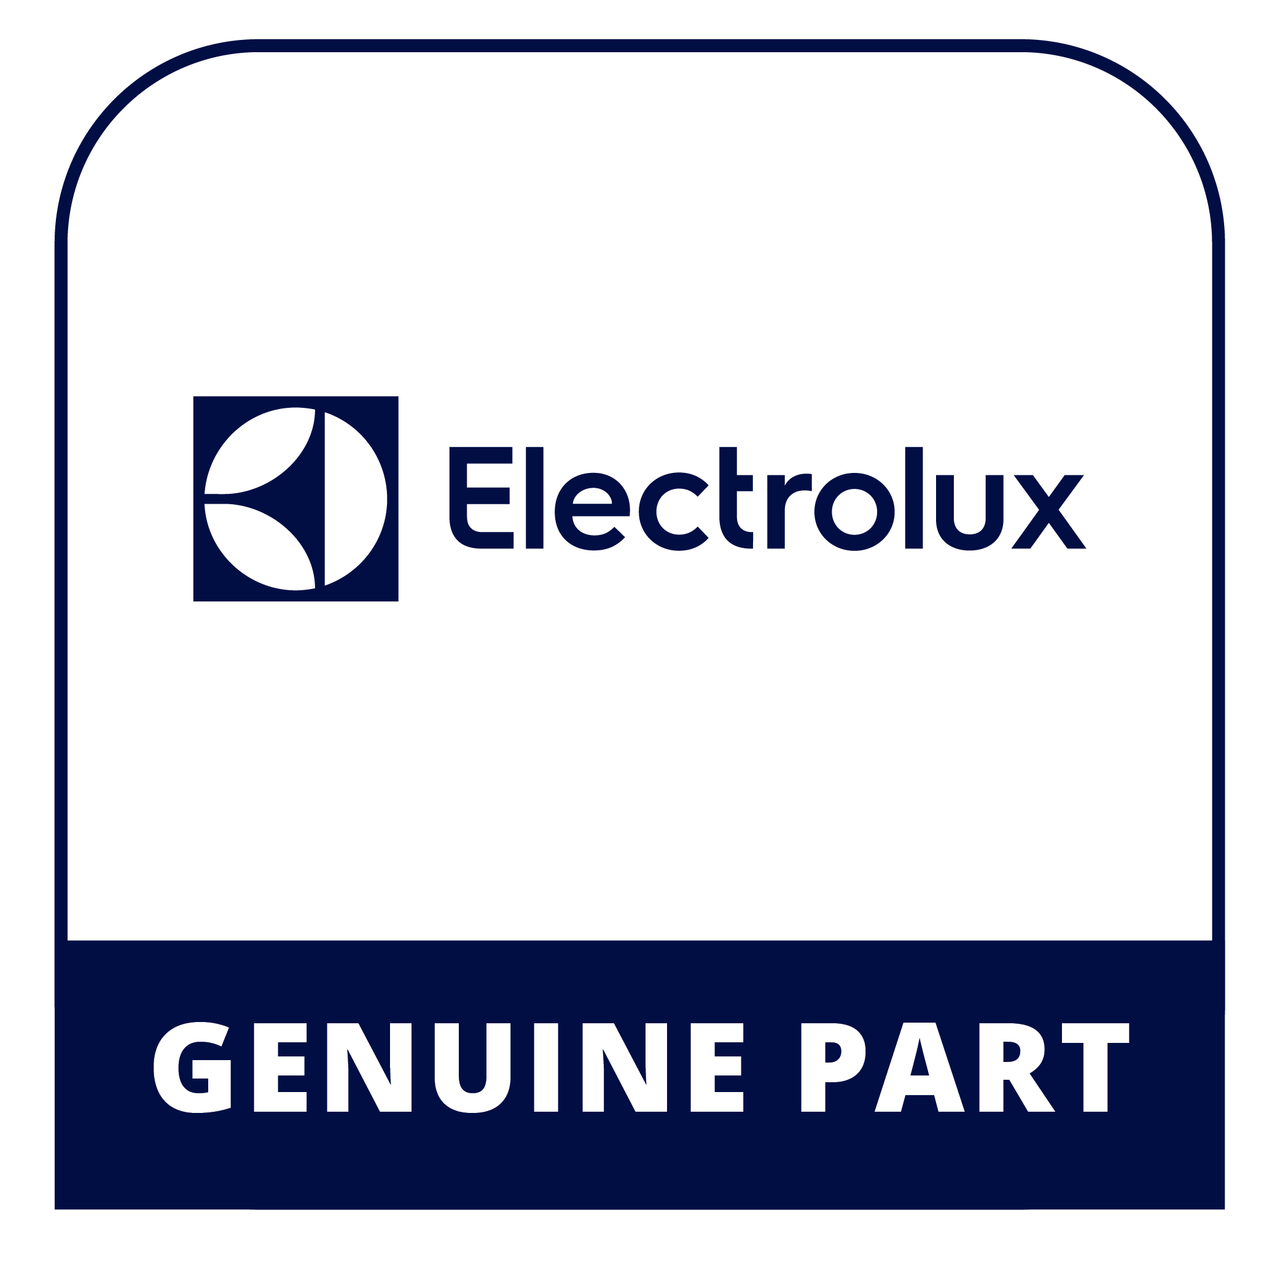 Frigidaire - Electrolux 316418558 Clock - Genuine Electrolux Part